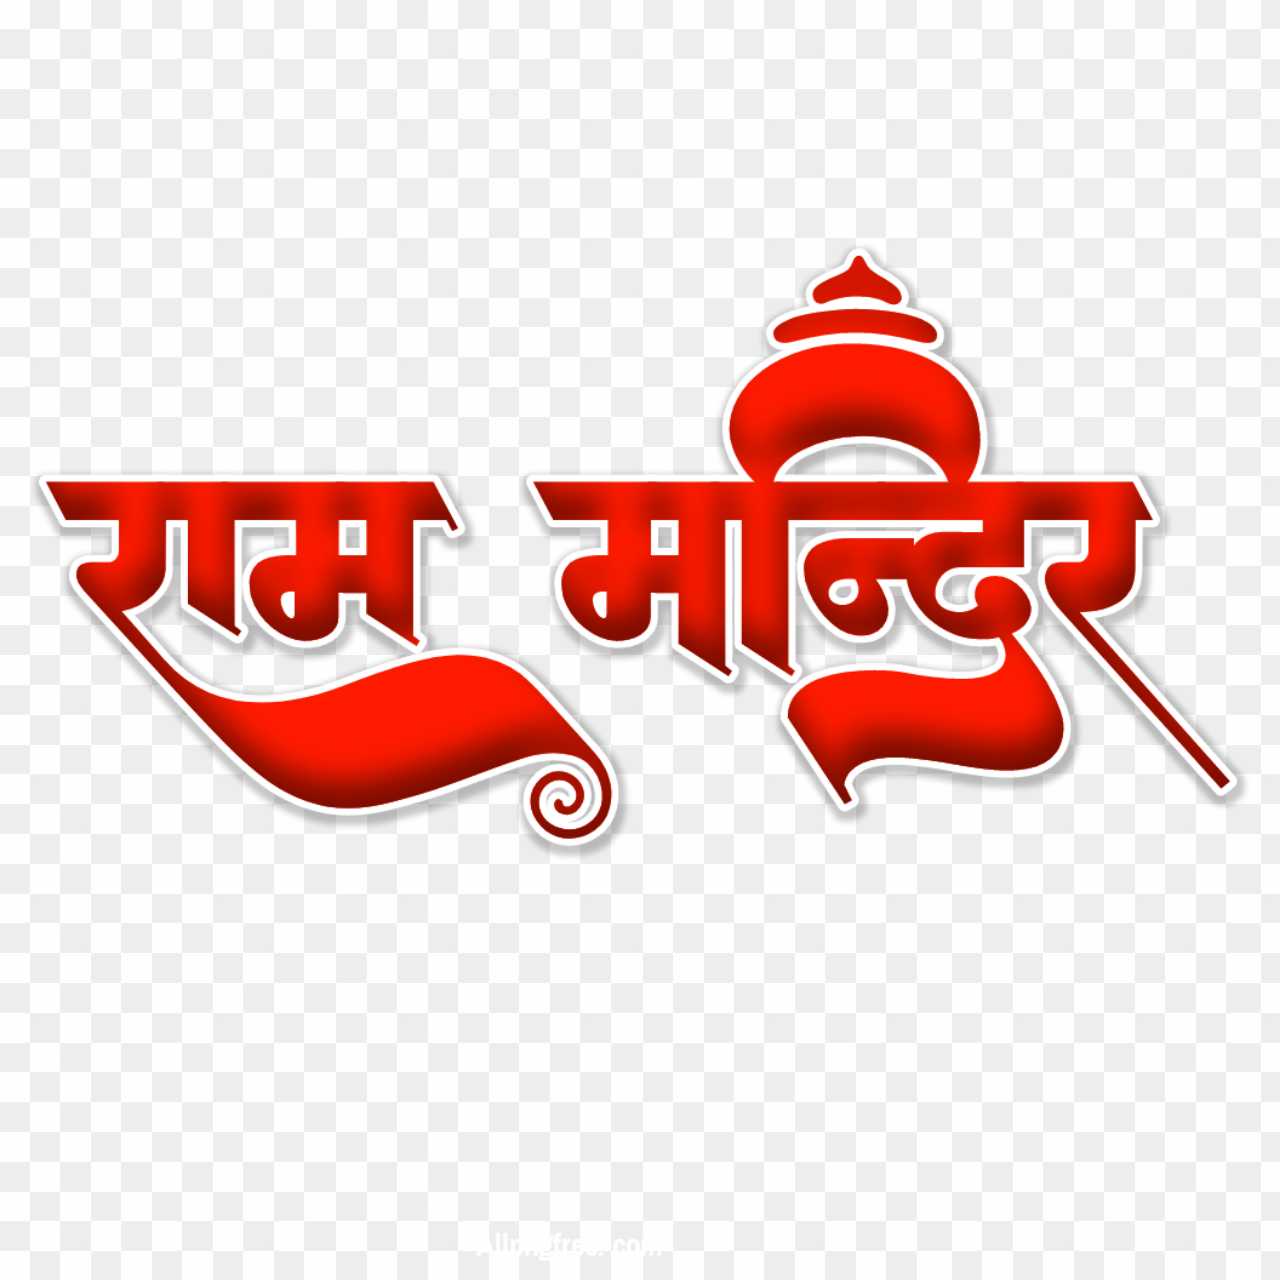 Hindi Ram Mandir text PNG download